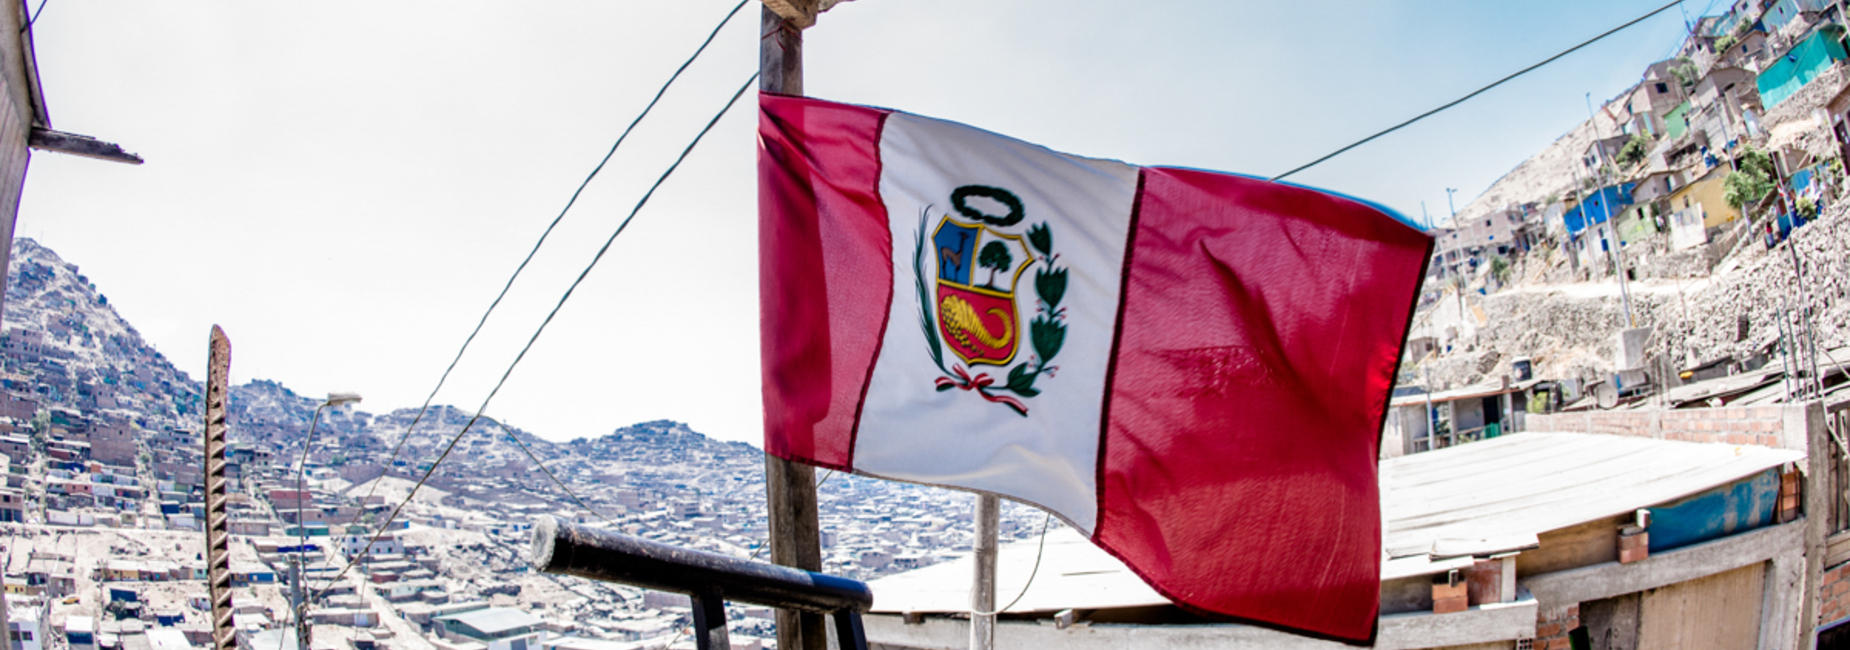 Freiwilligenarbeit in Peru - Peruanische Fahne in Lima